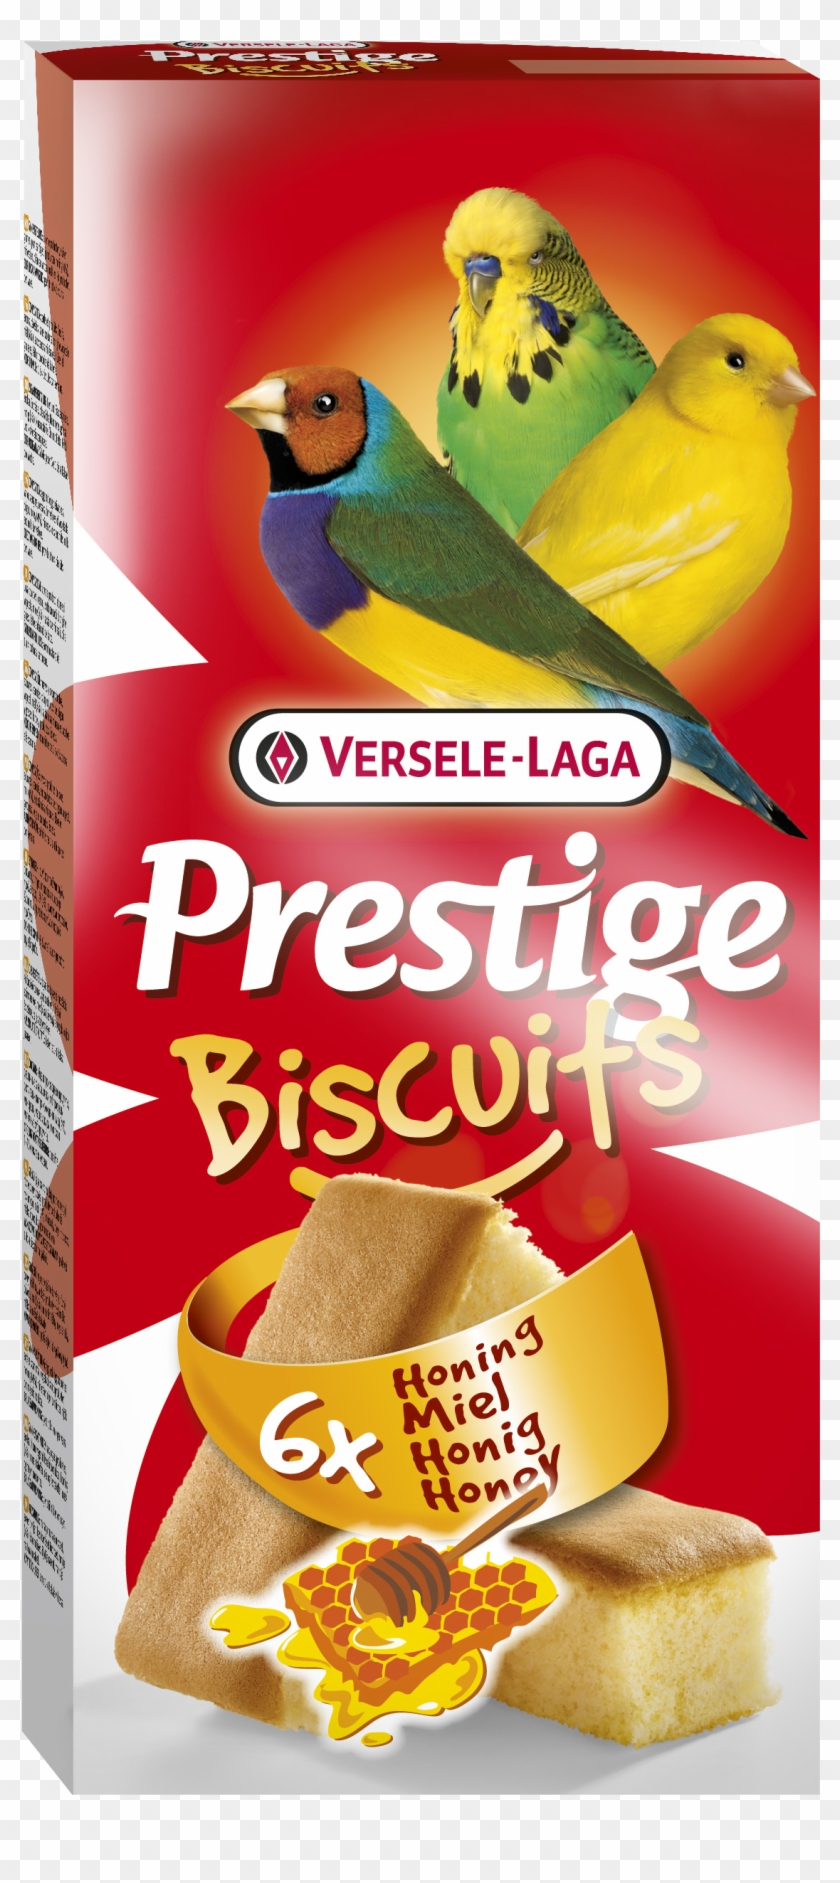 Verselela Biscuits Miel - Versele Laga Prestige Biscuits Clipart #4658708